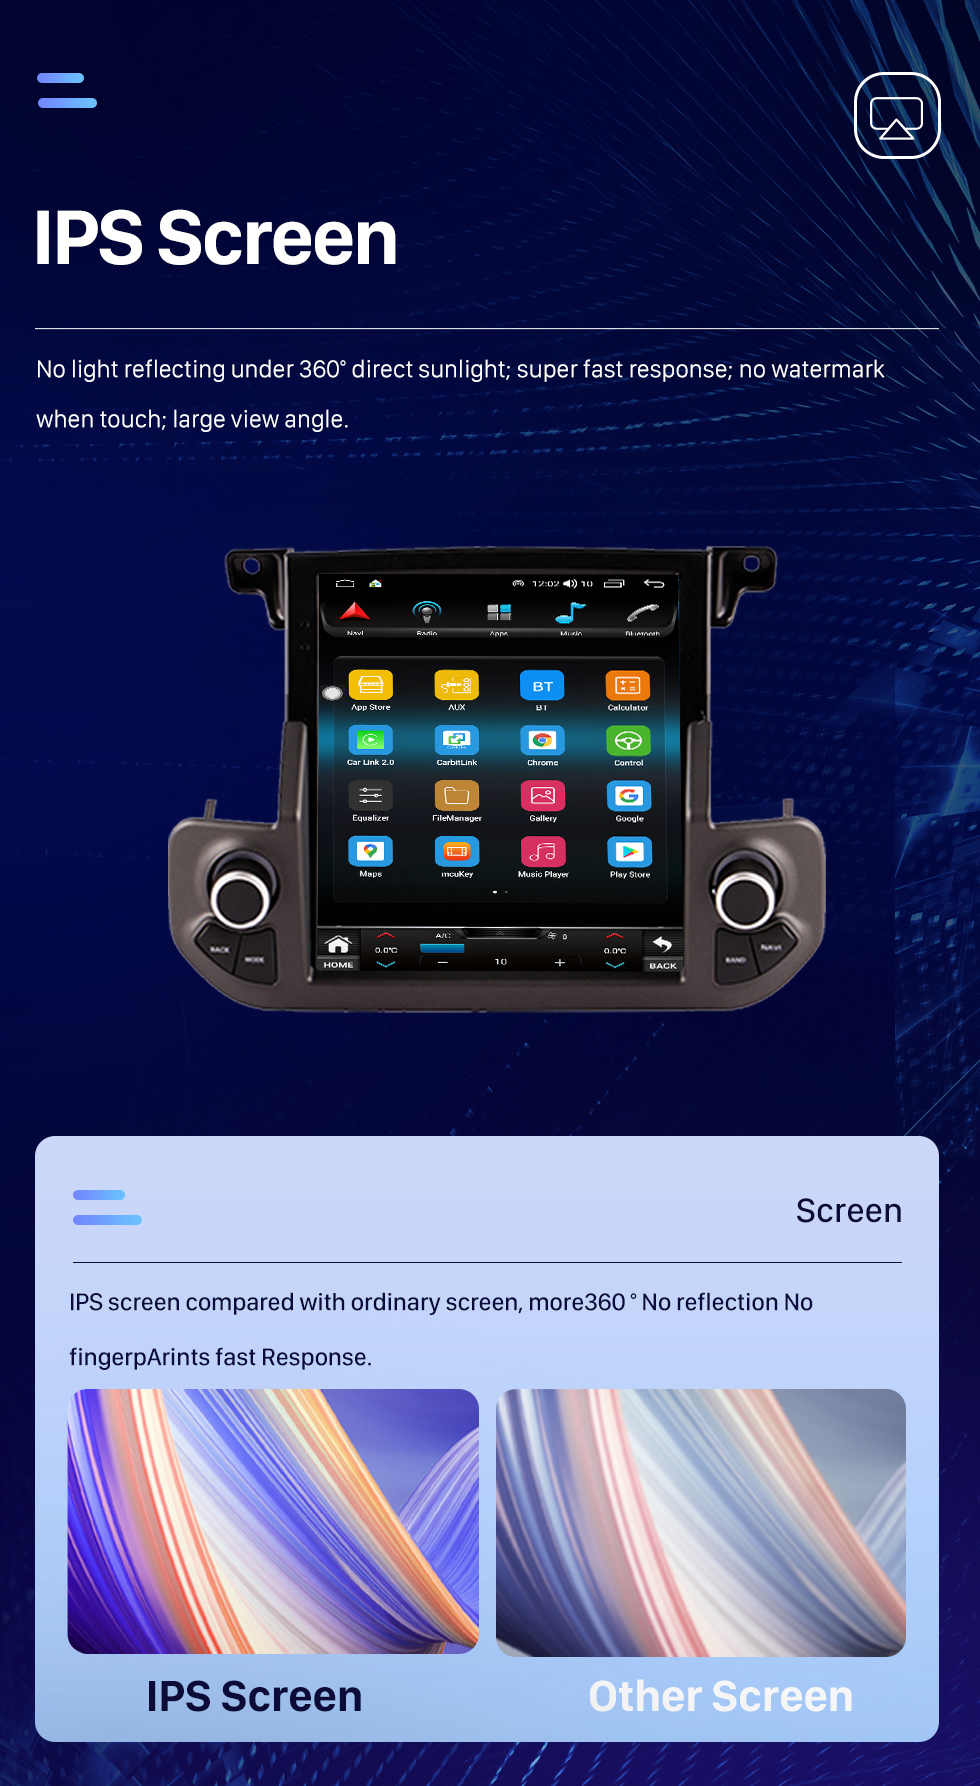 Seicane OEM 9,7-дюймовый Android 10.0 Radio для 2009-2016 Land Rover Discoverer 4 LR4 Bluetooth WIFI HD Сенсорный экран GPS-навигация с Bluetooth Поддержка Carplay AHD-камера